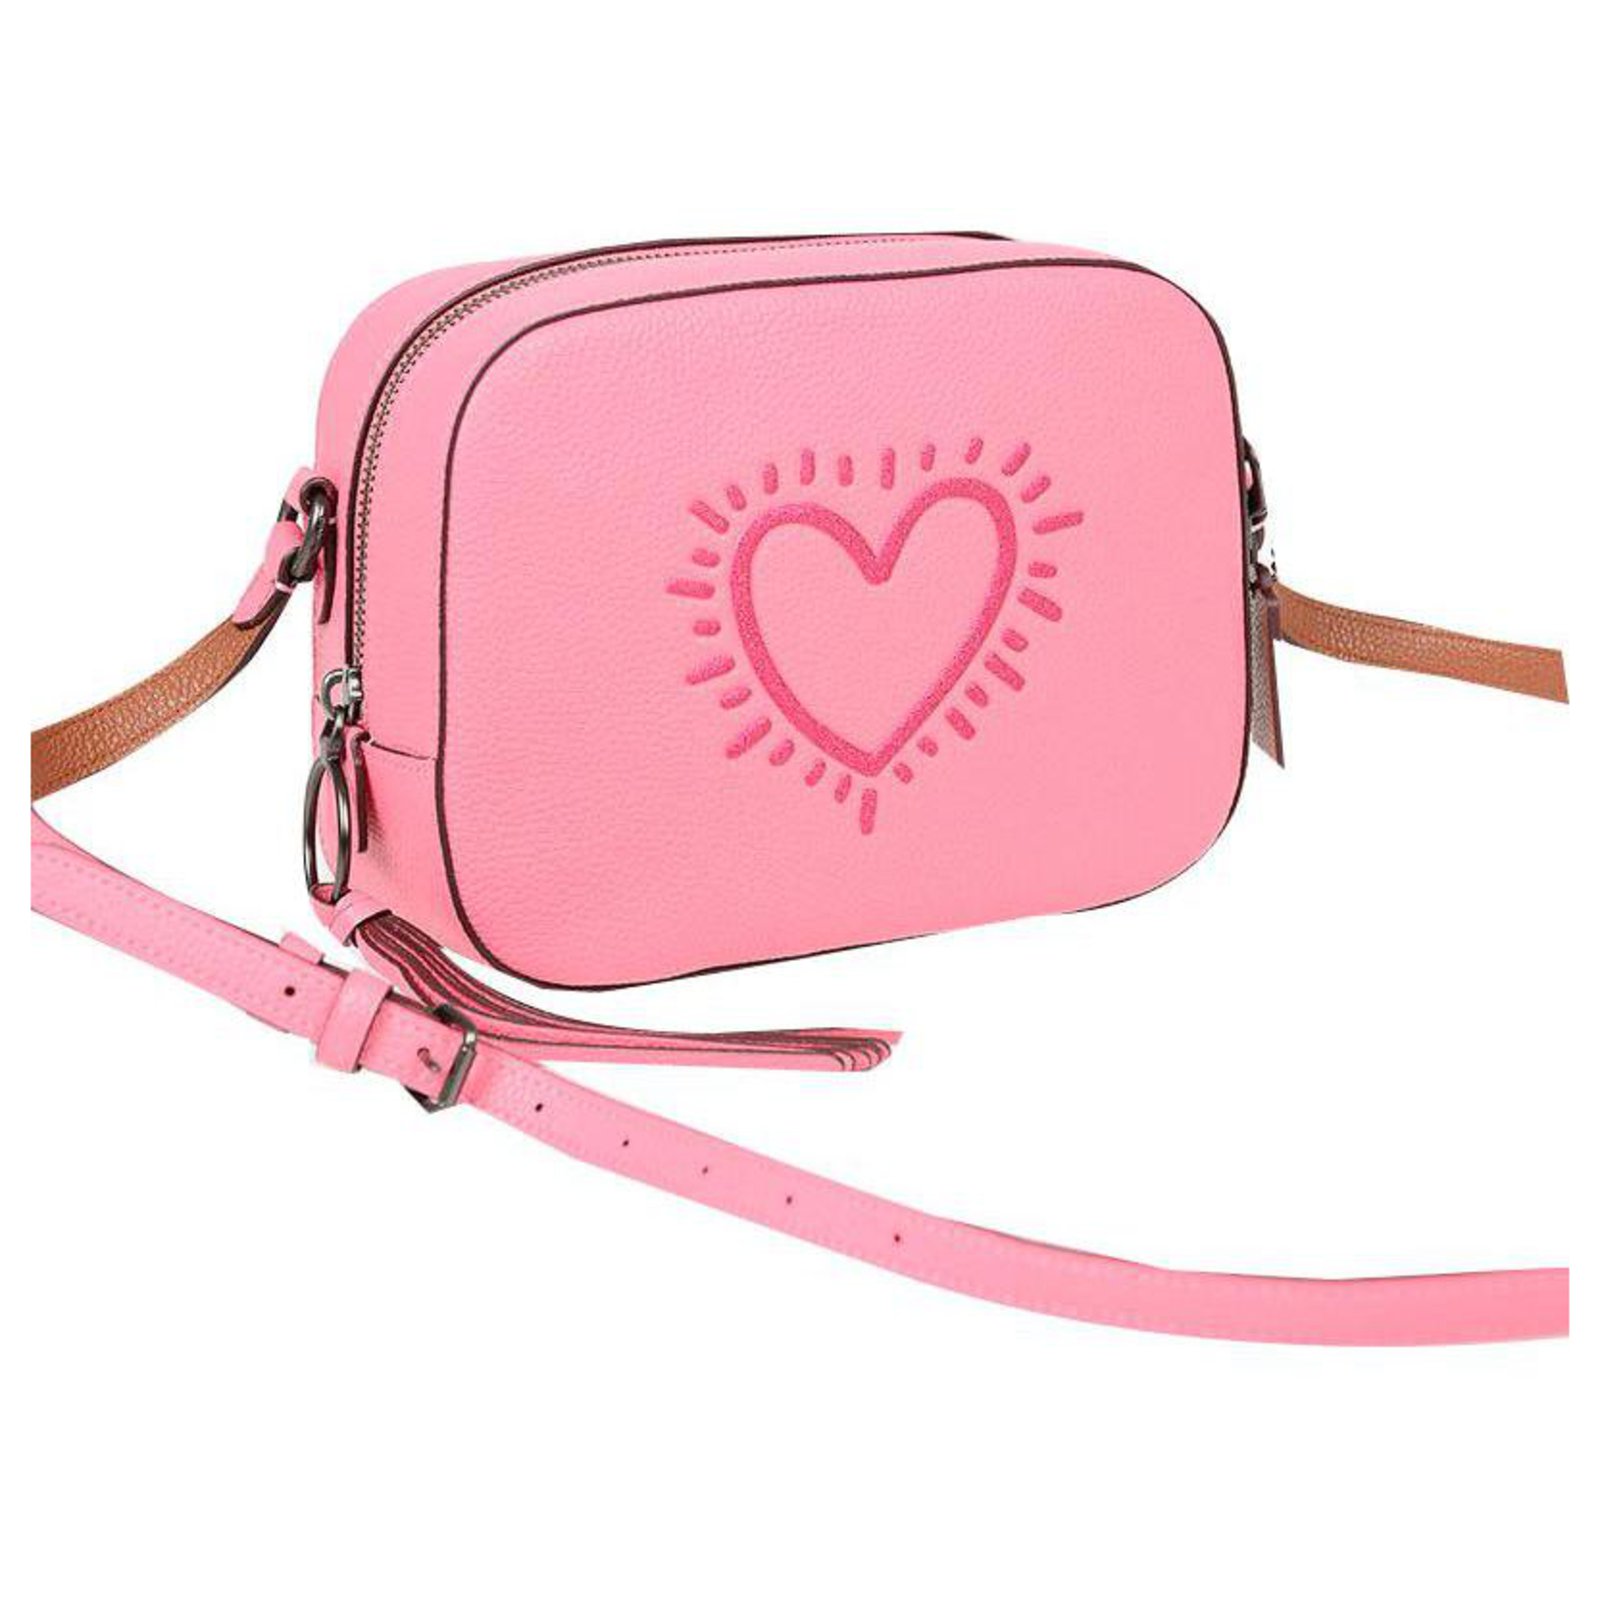  Pink COACH Handbags